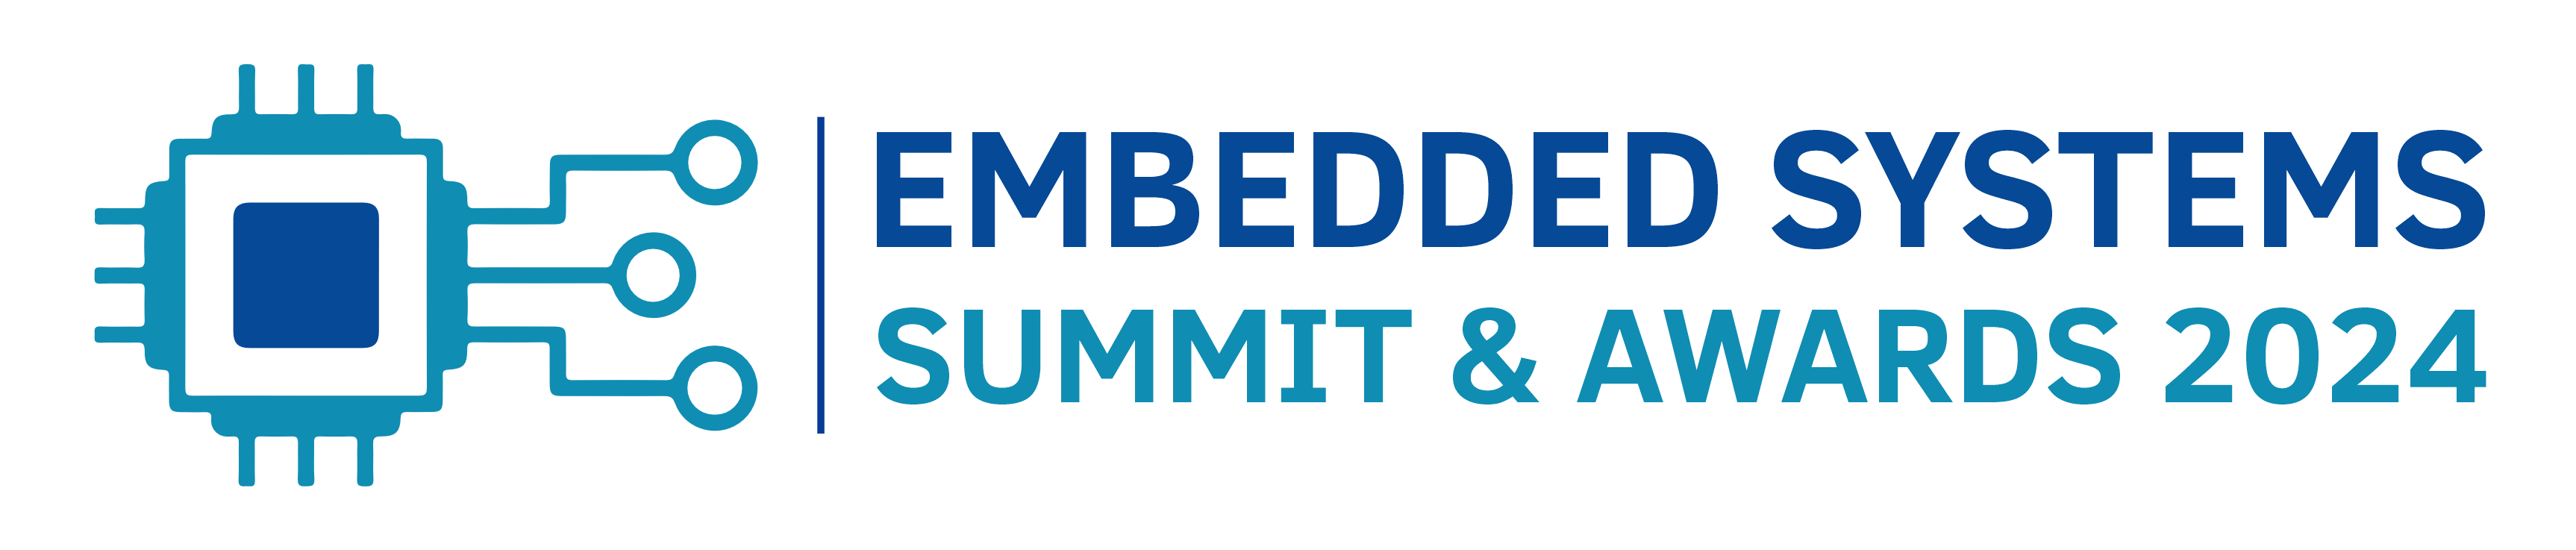 Embeddd system Summit & Awards 2024